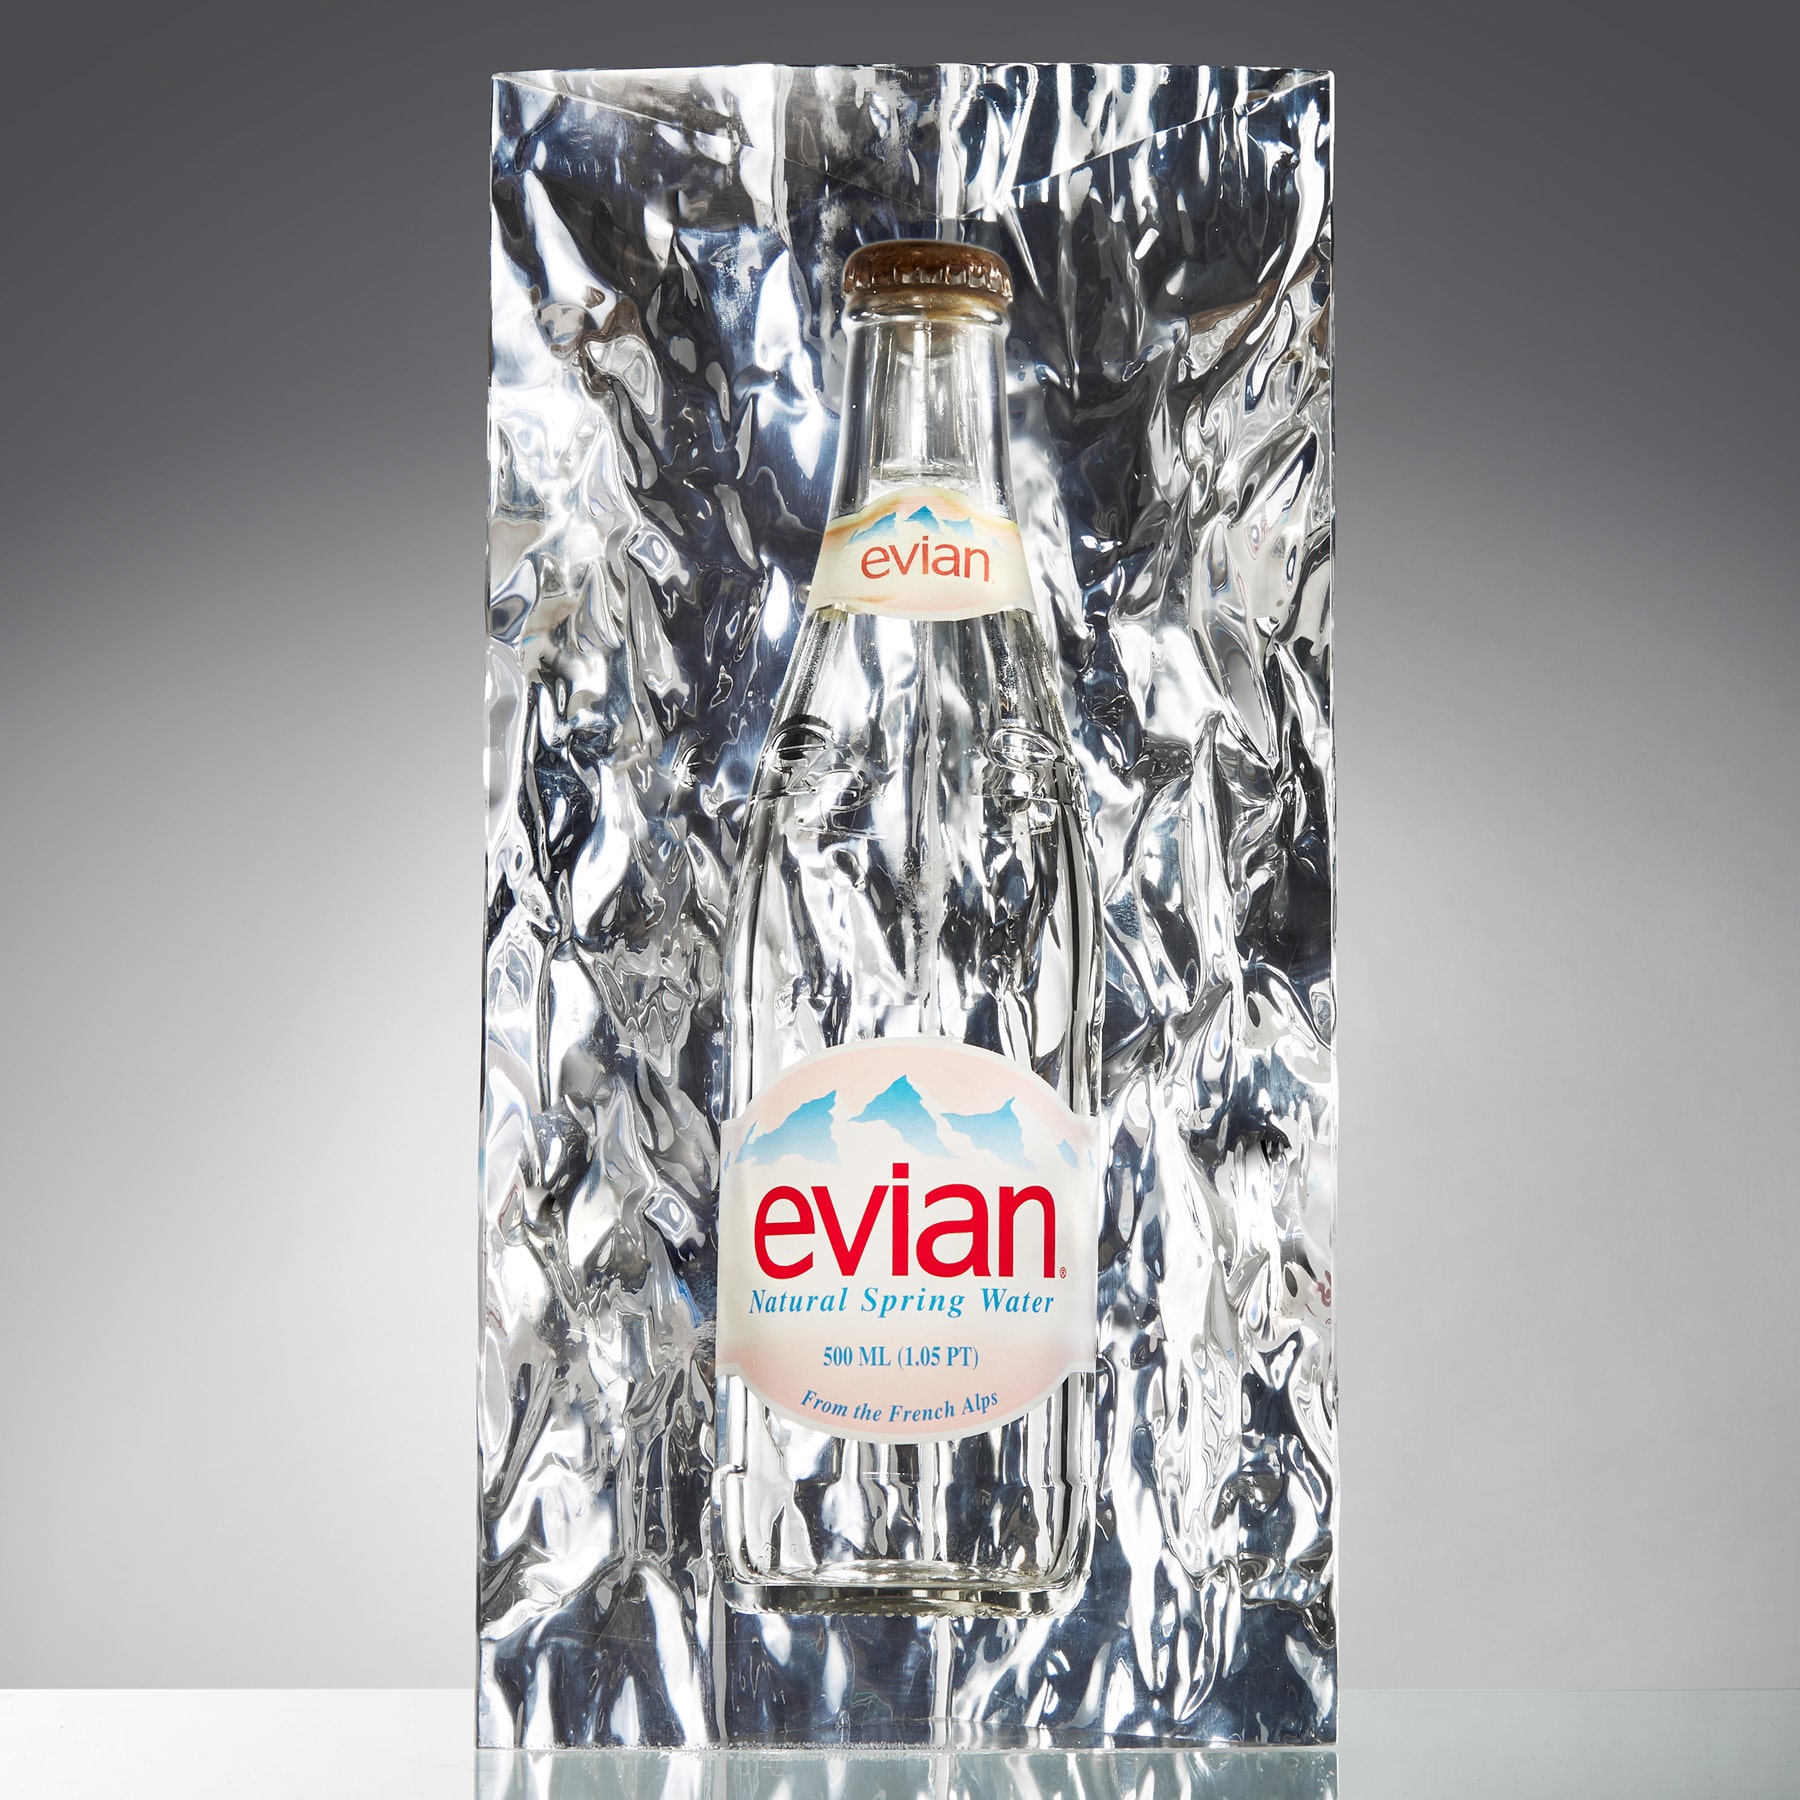 Evian Bottle in Glass Award